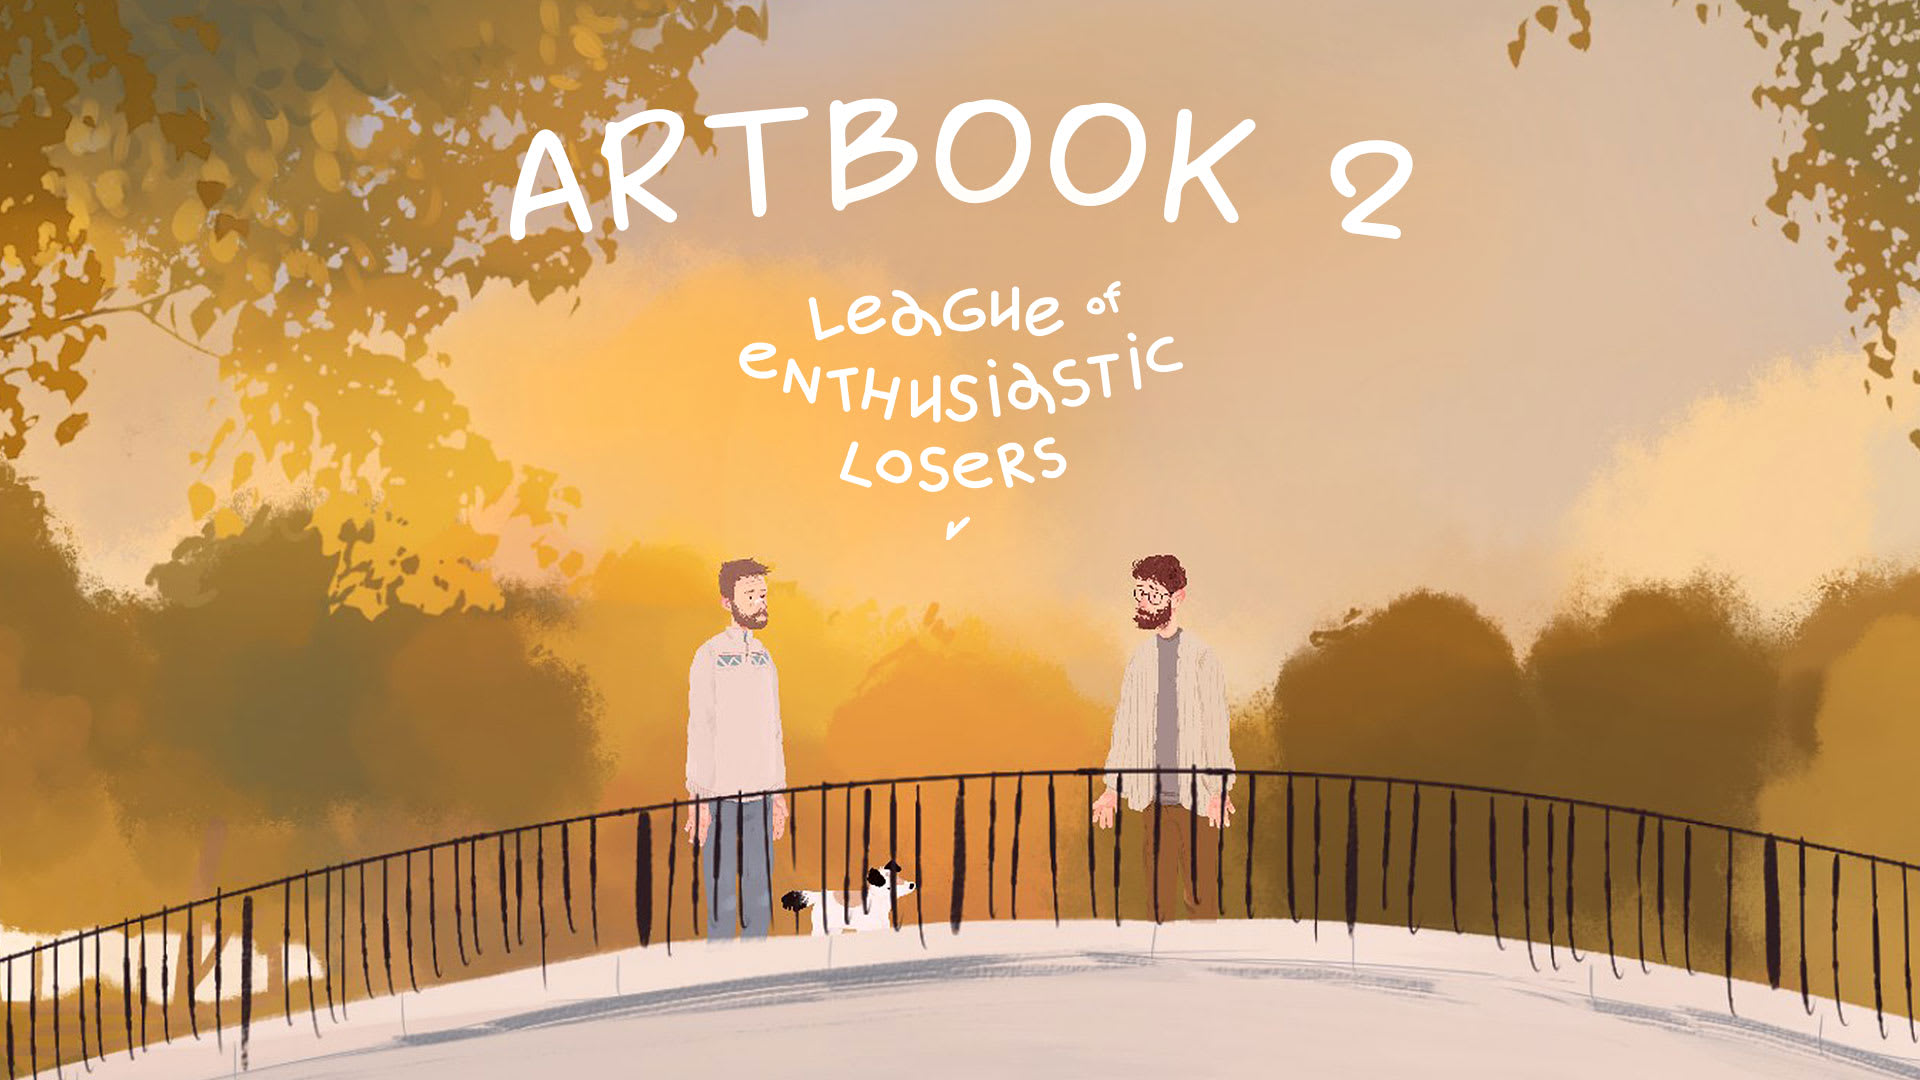 League of Enthusiastic Losers Artbook #2